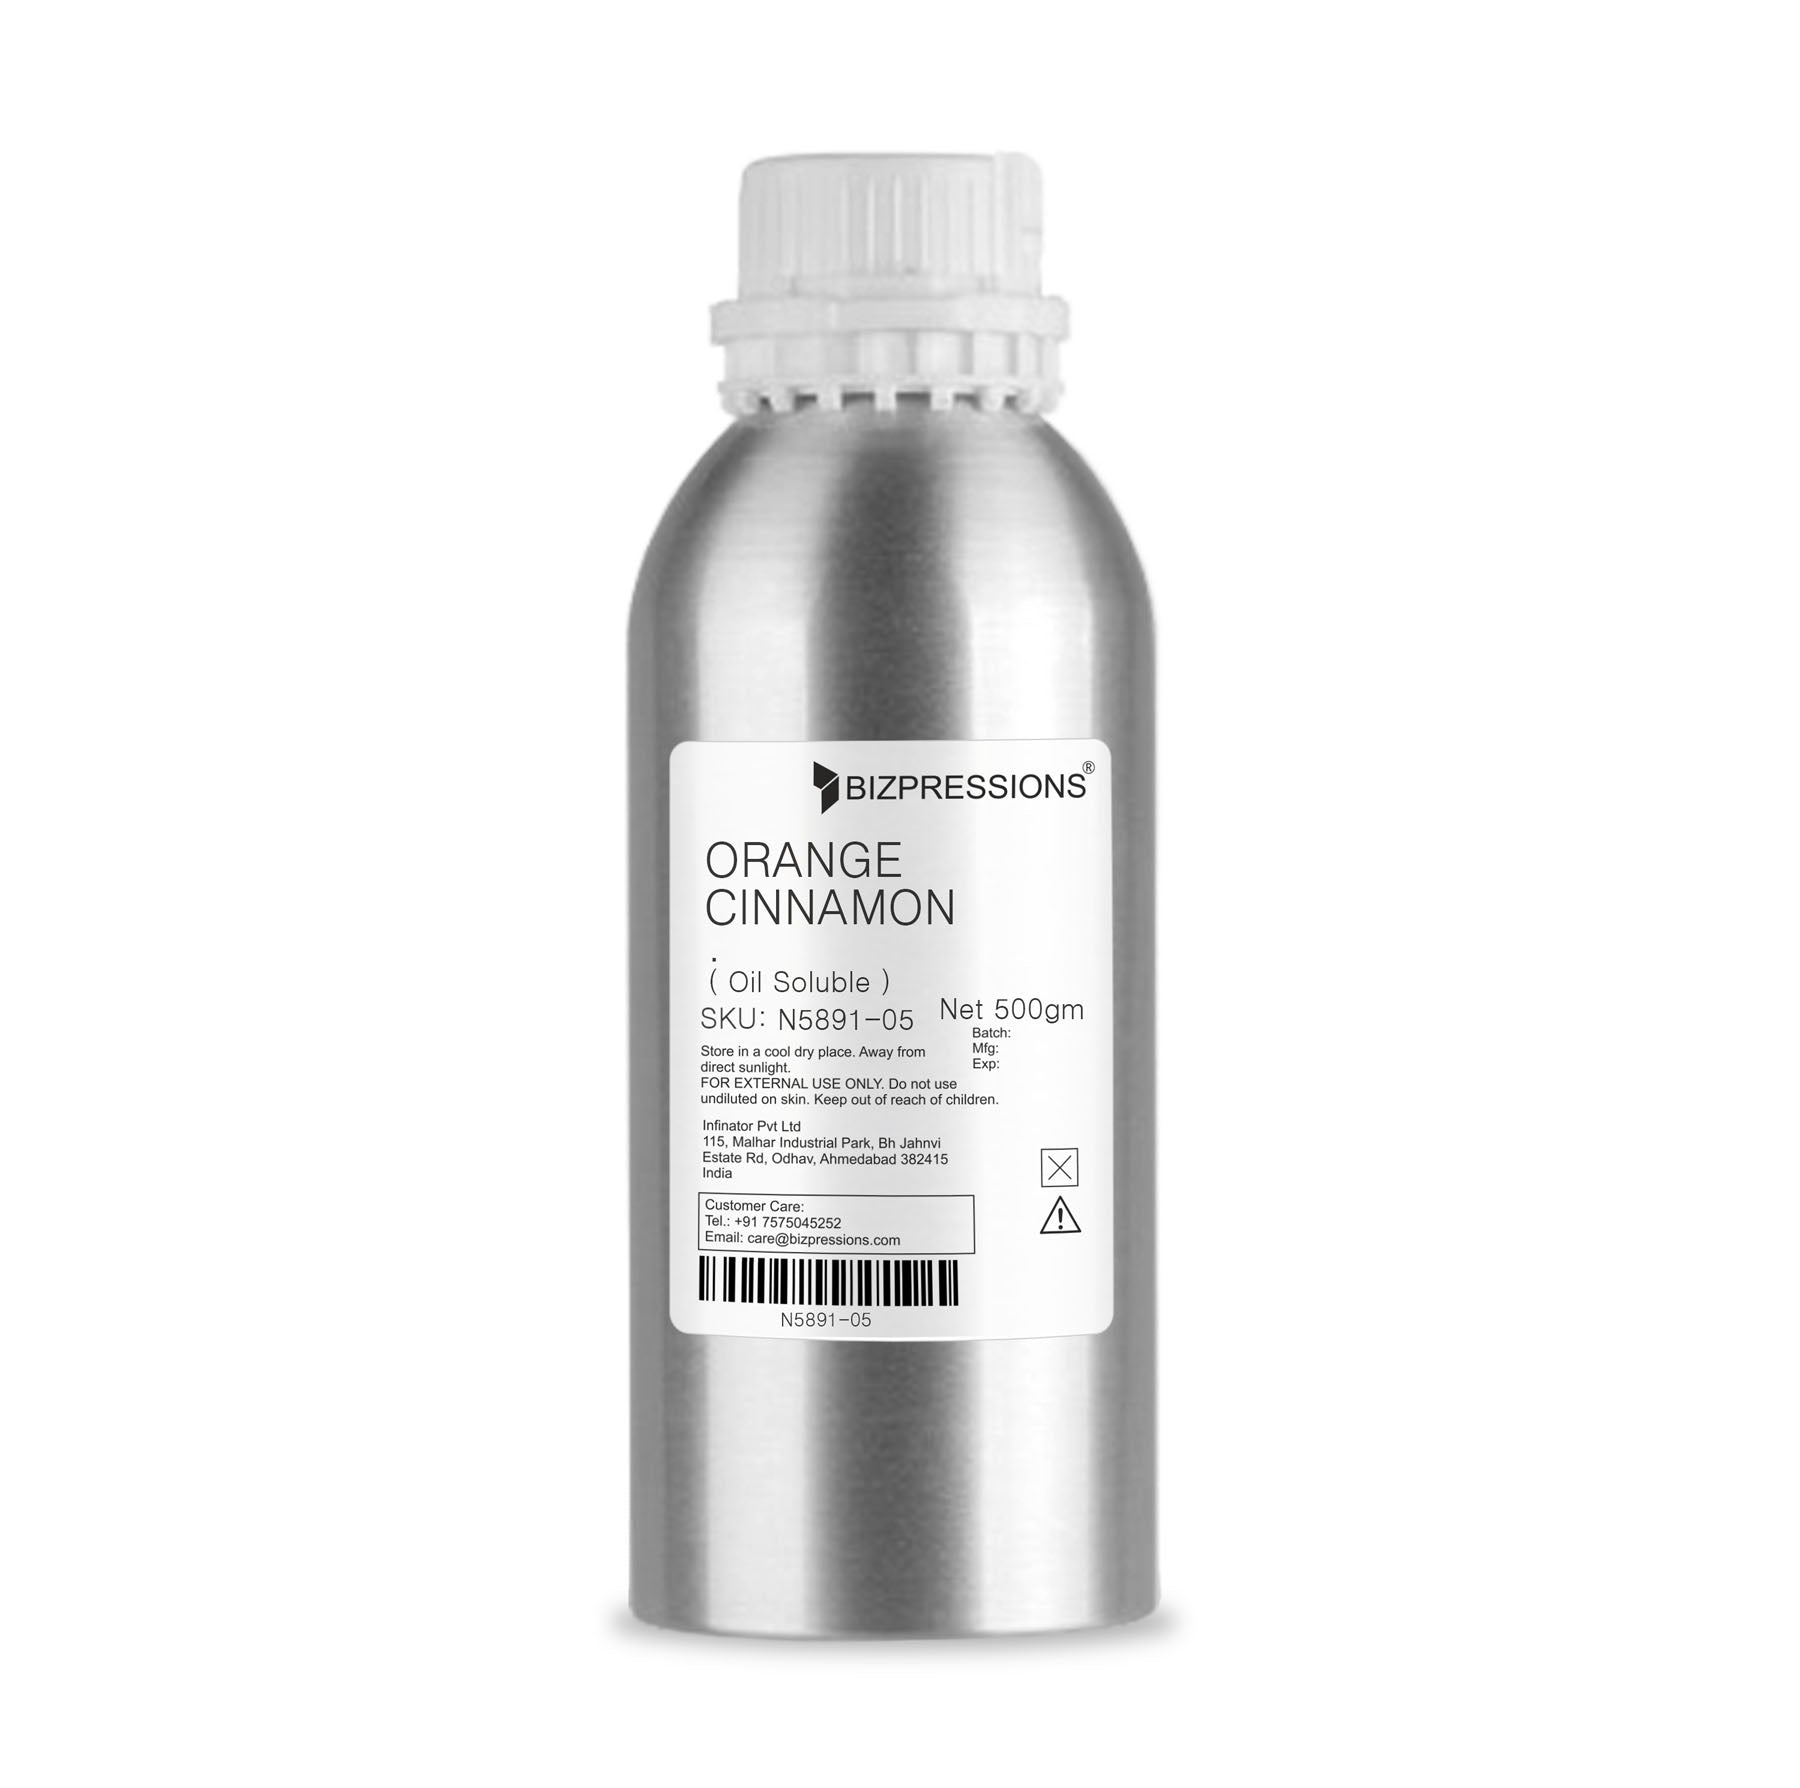 ORANGE CINNAMON - Fragrance ( Oil Soluble ) - 500 gm